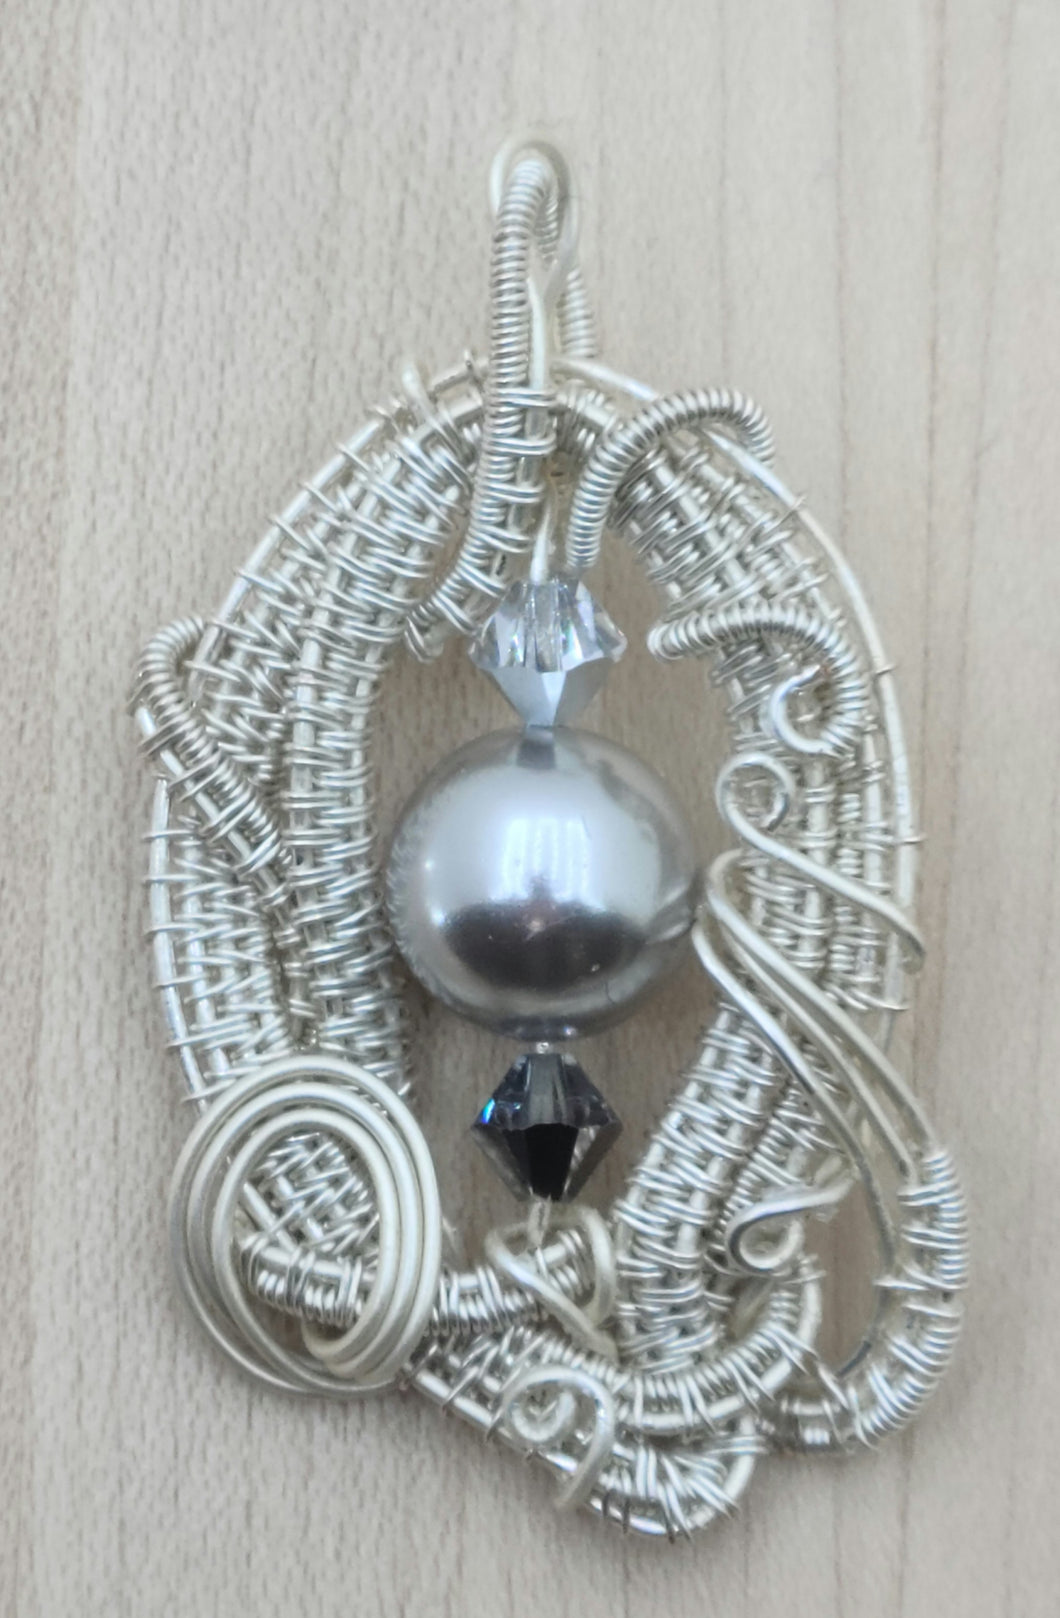 Woven Wire Silver Shell Pearl Pendant